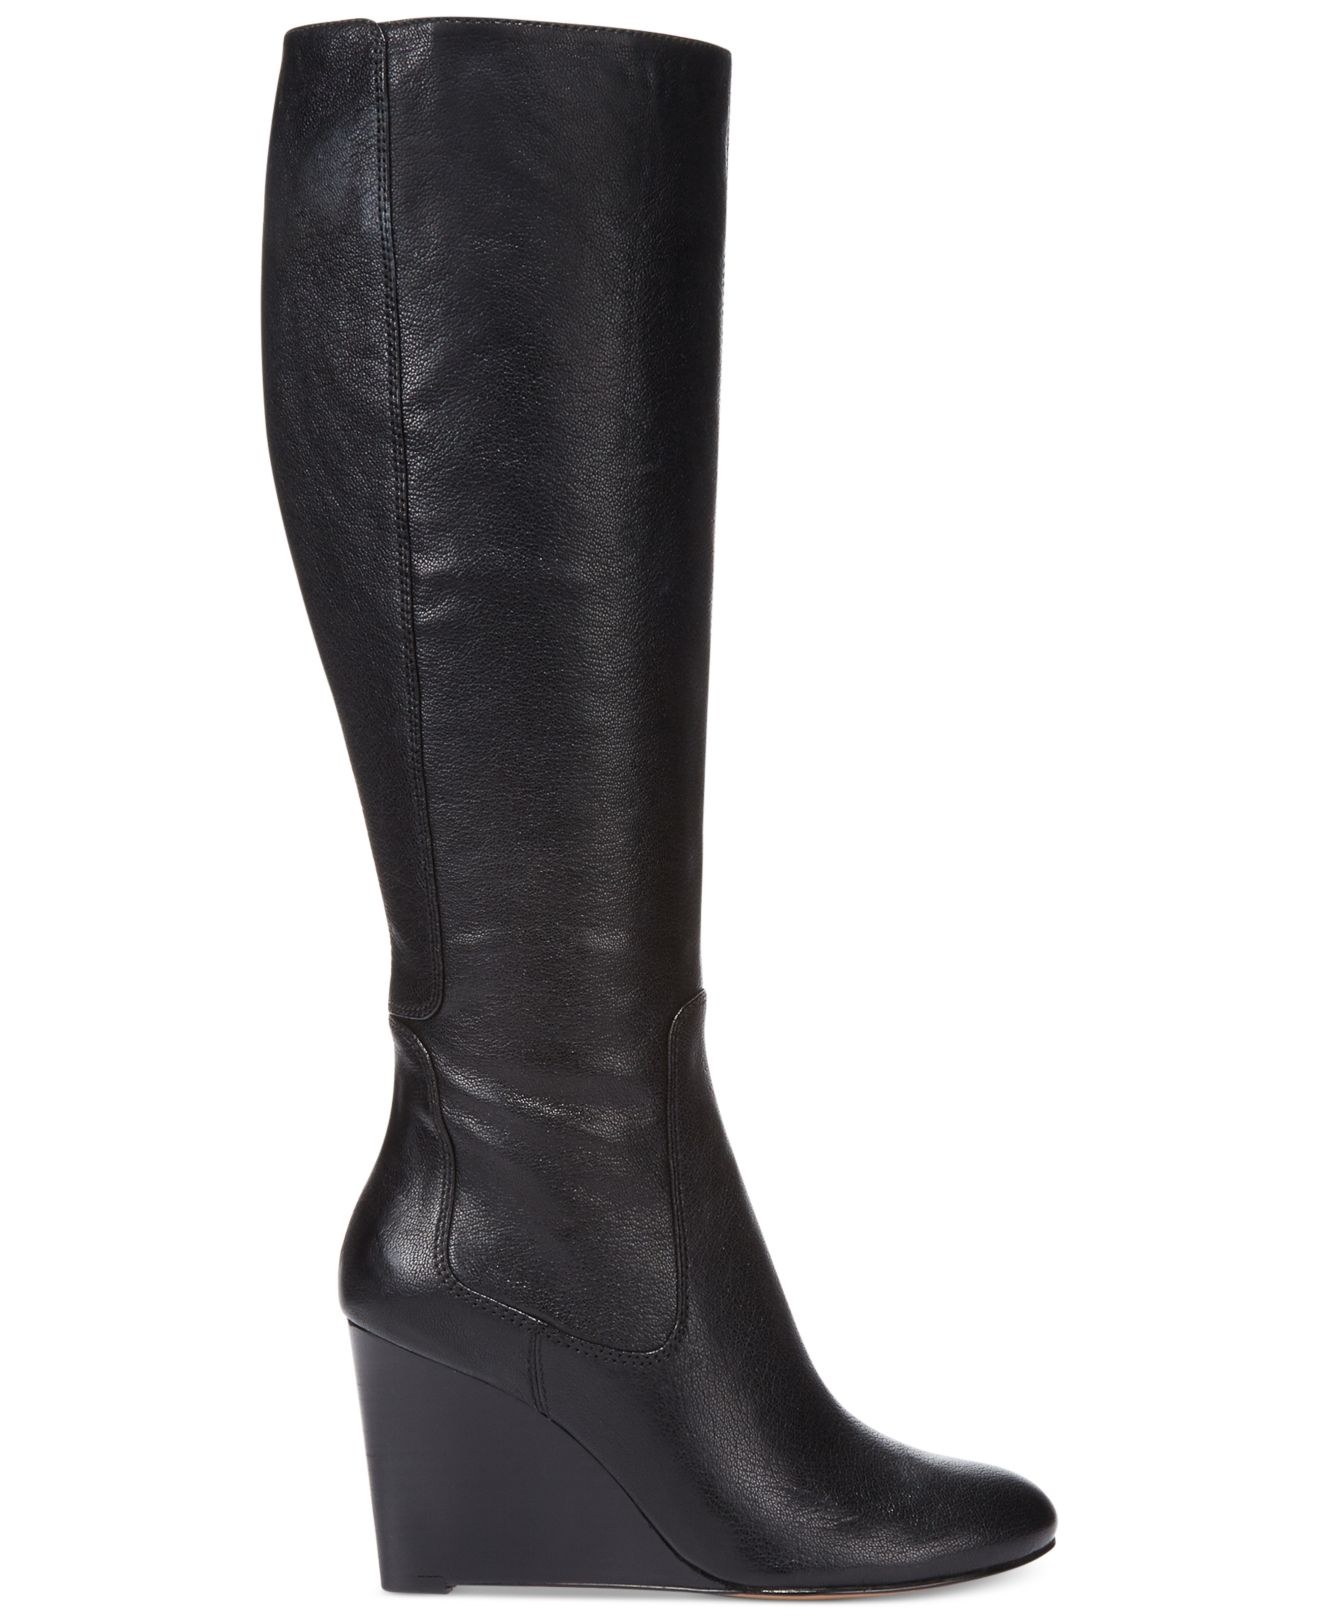 black wedge dress boots